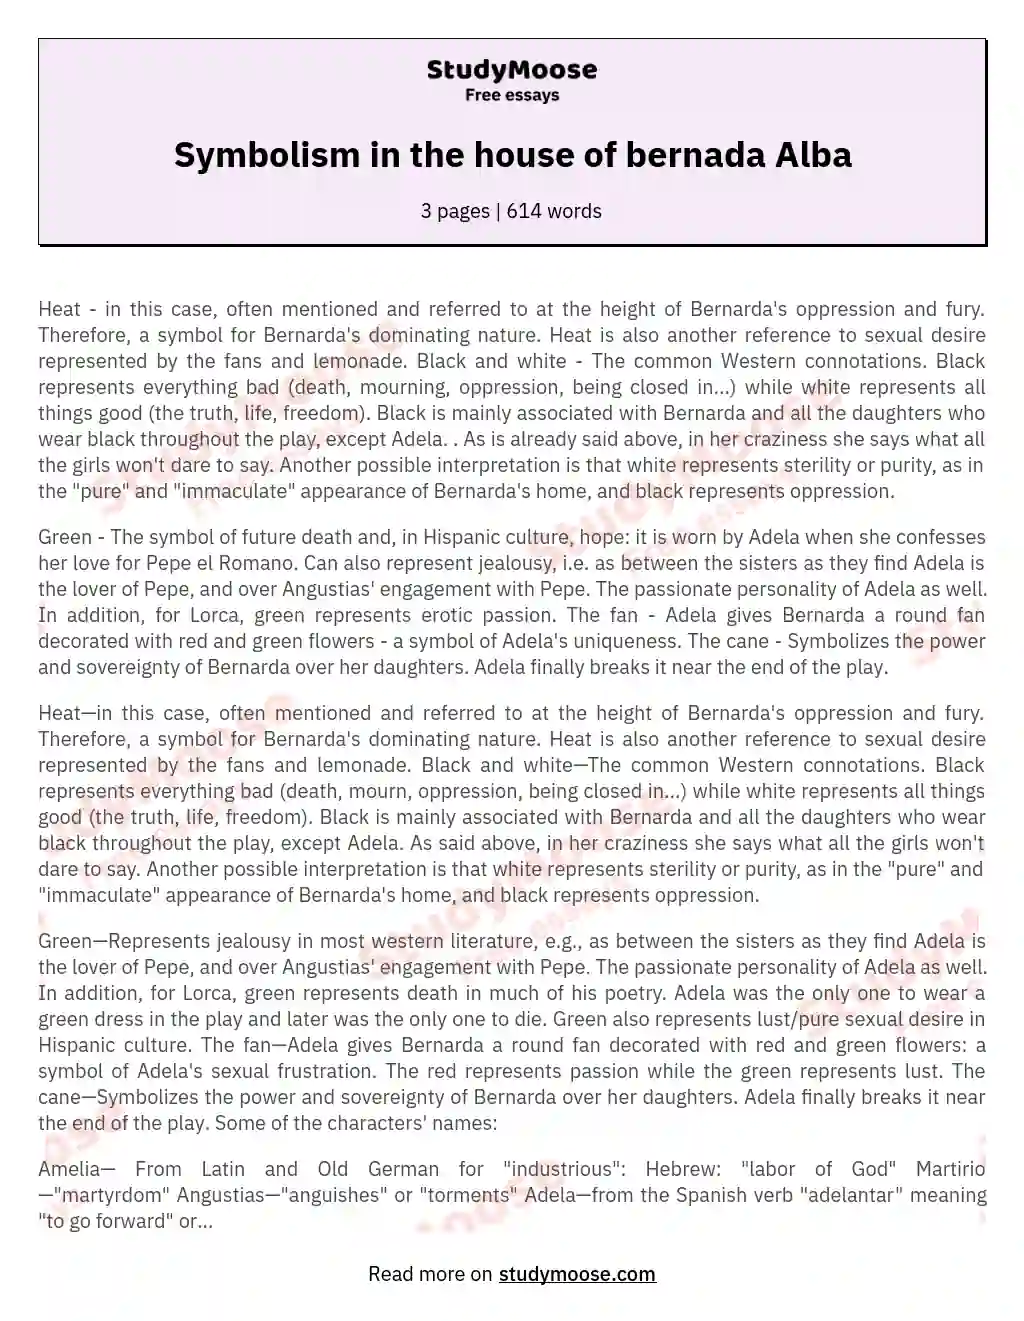 Symbolism in the house of bernada Alba essay